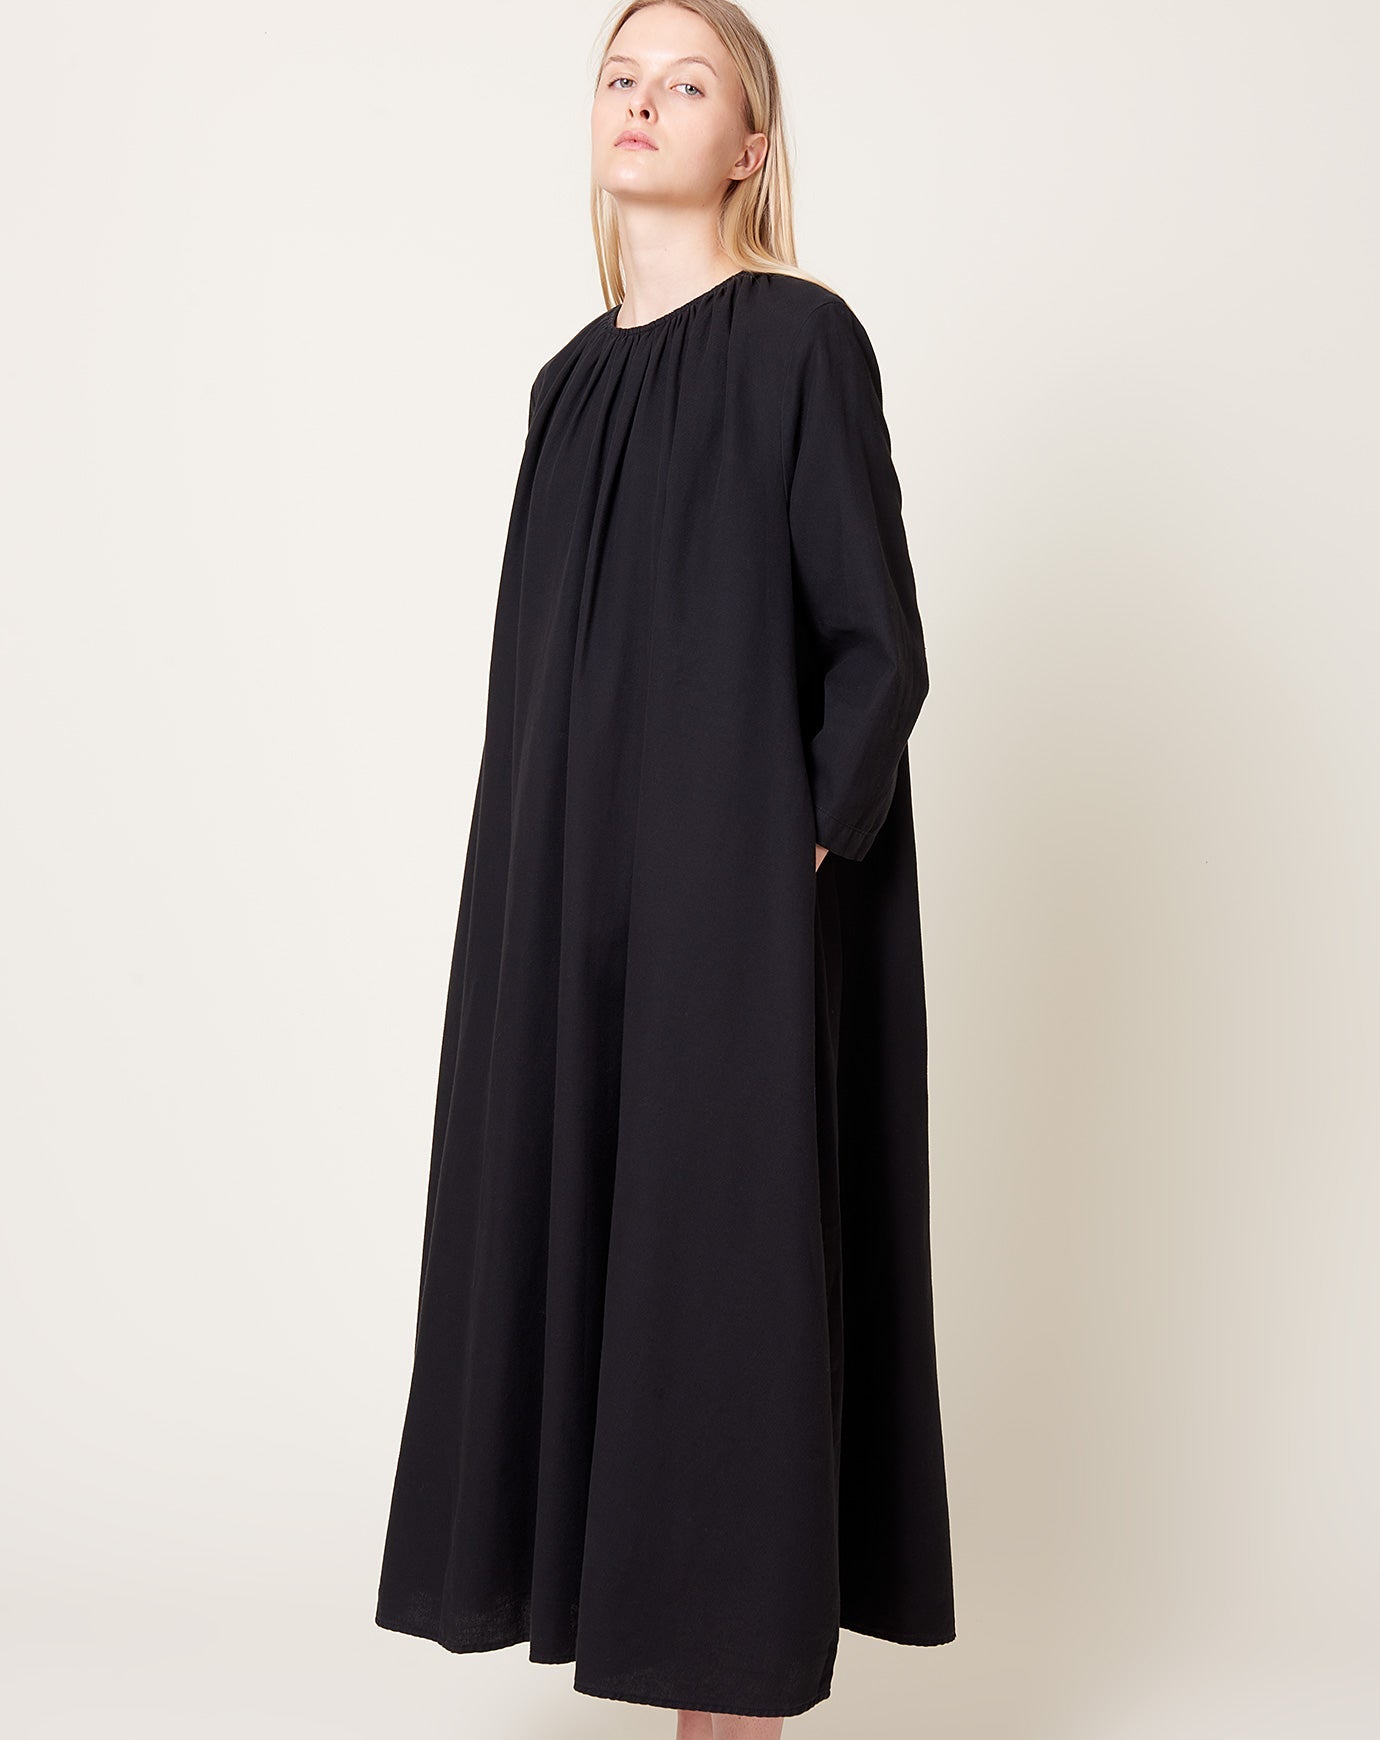 Black Crane Shirred Neck Dress in Black